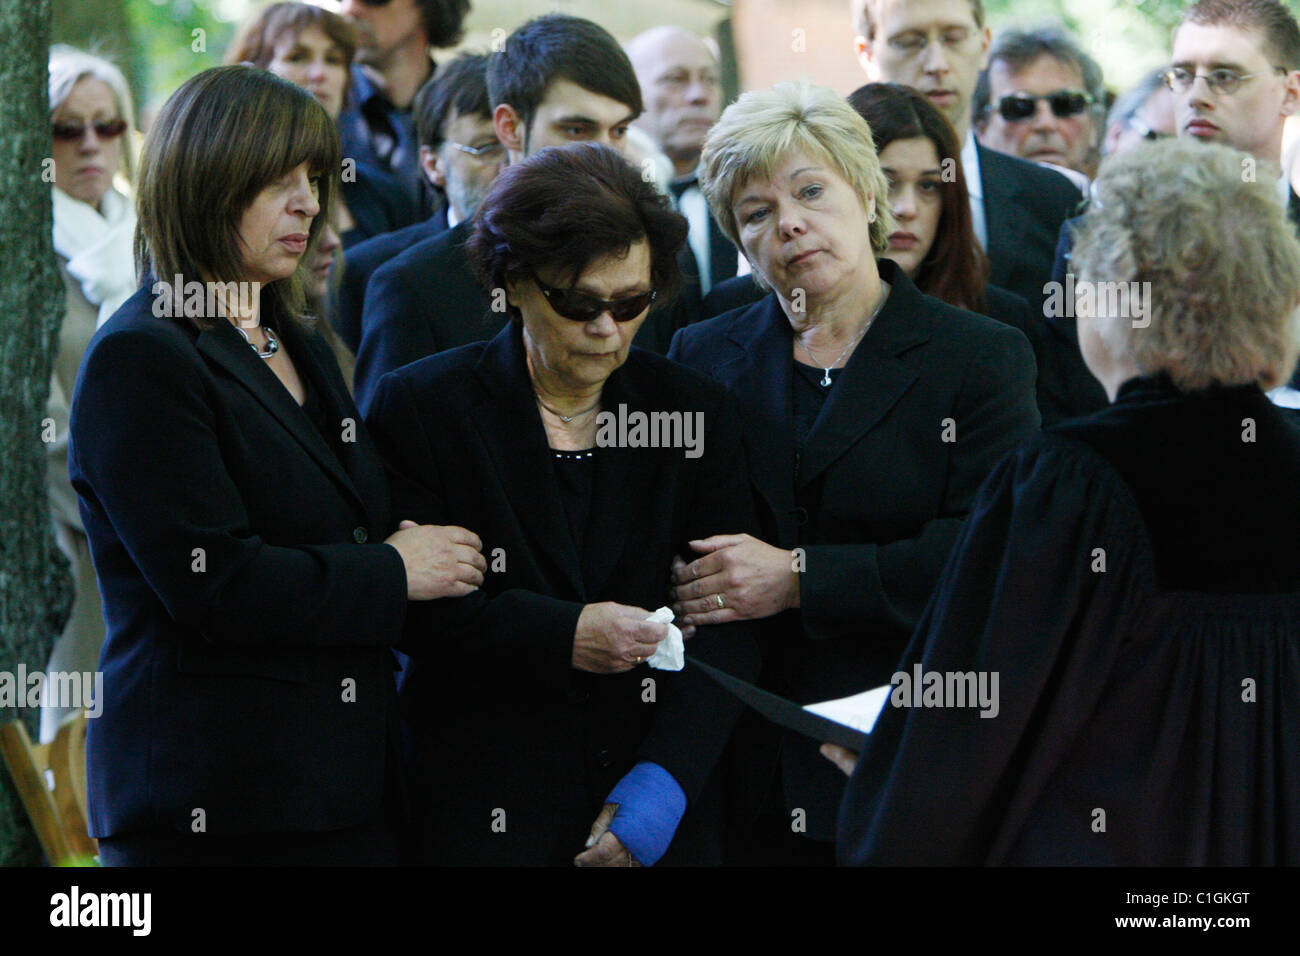 Guests Funeral of German actress Barbara Rudnik at Nordfriedhof Munich, Germany - 29.05.09 Stock Photo